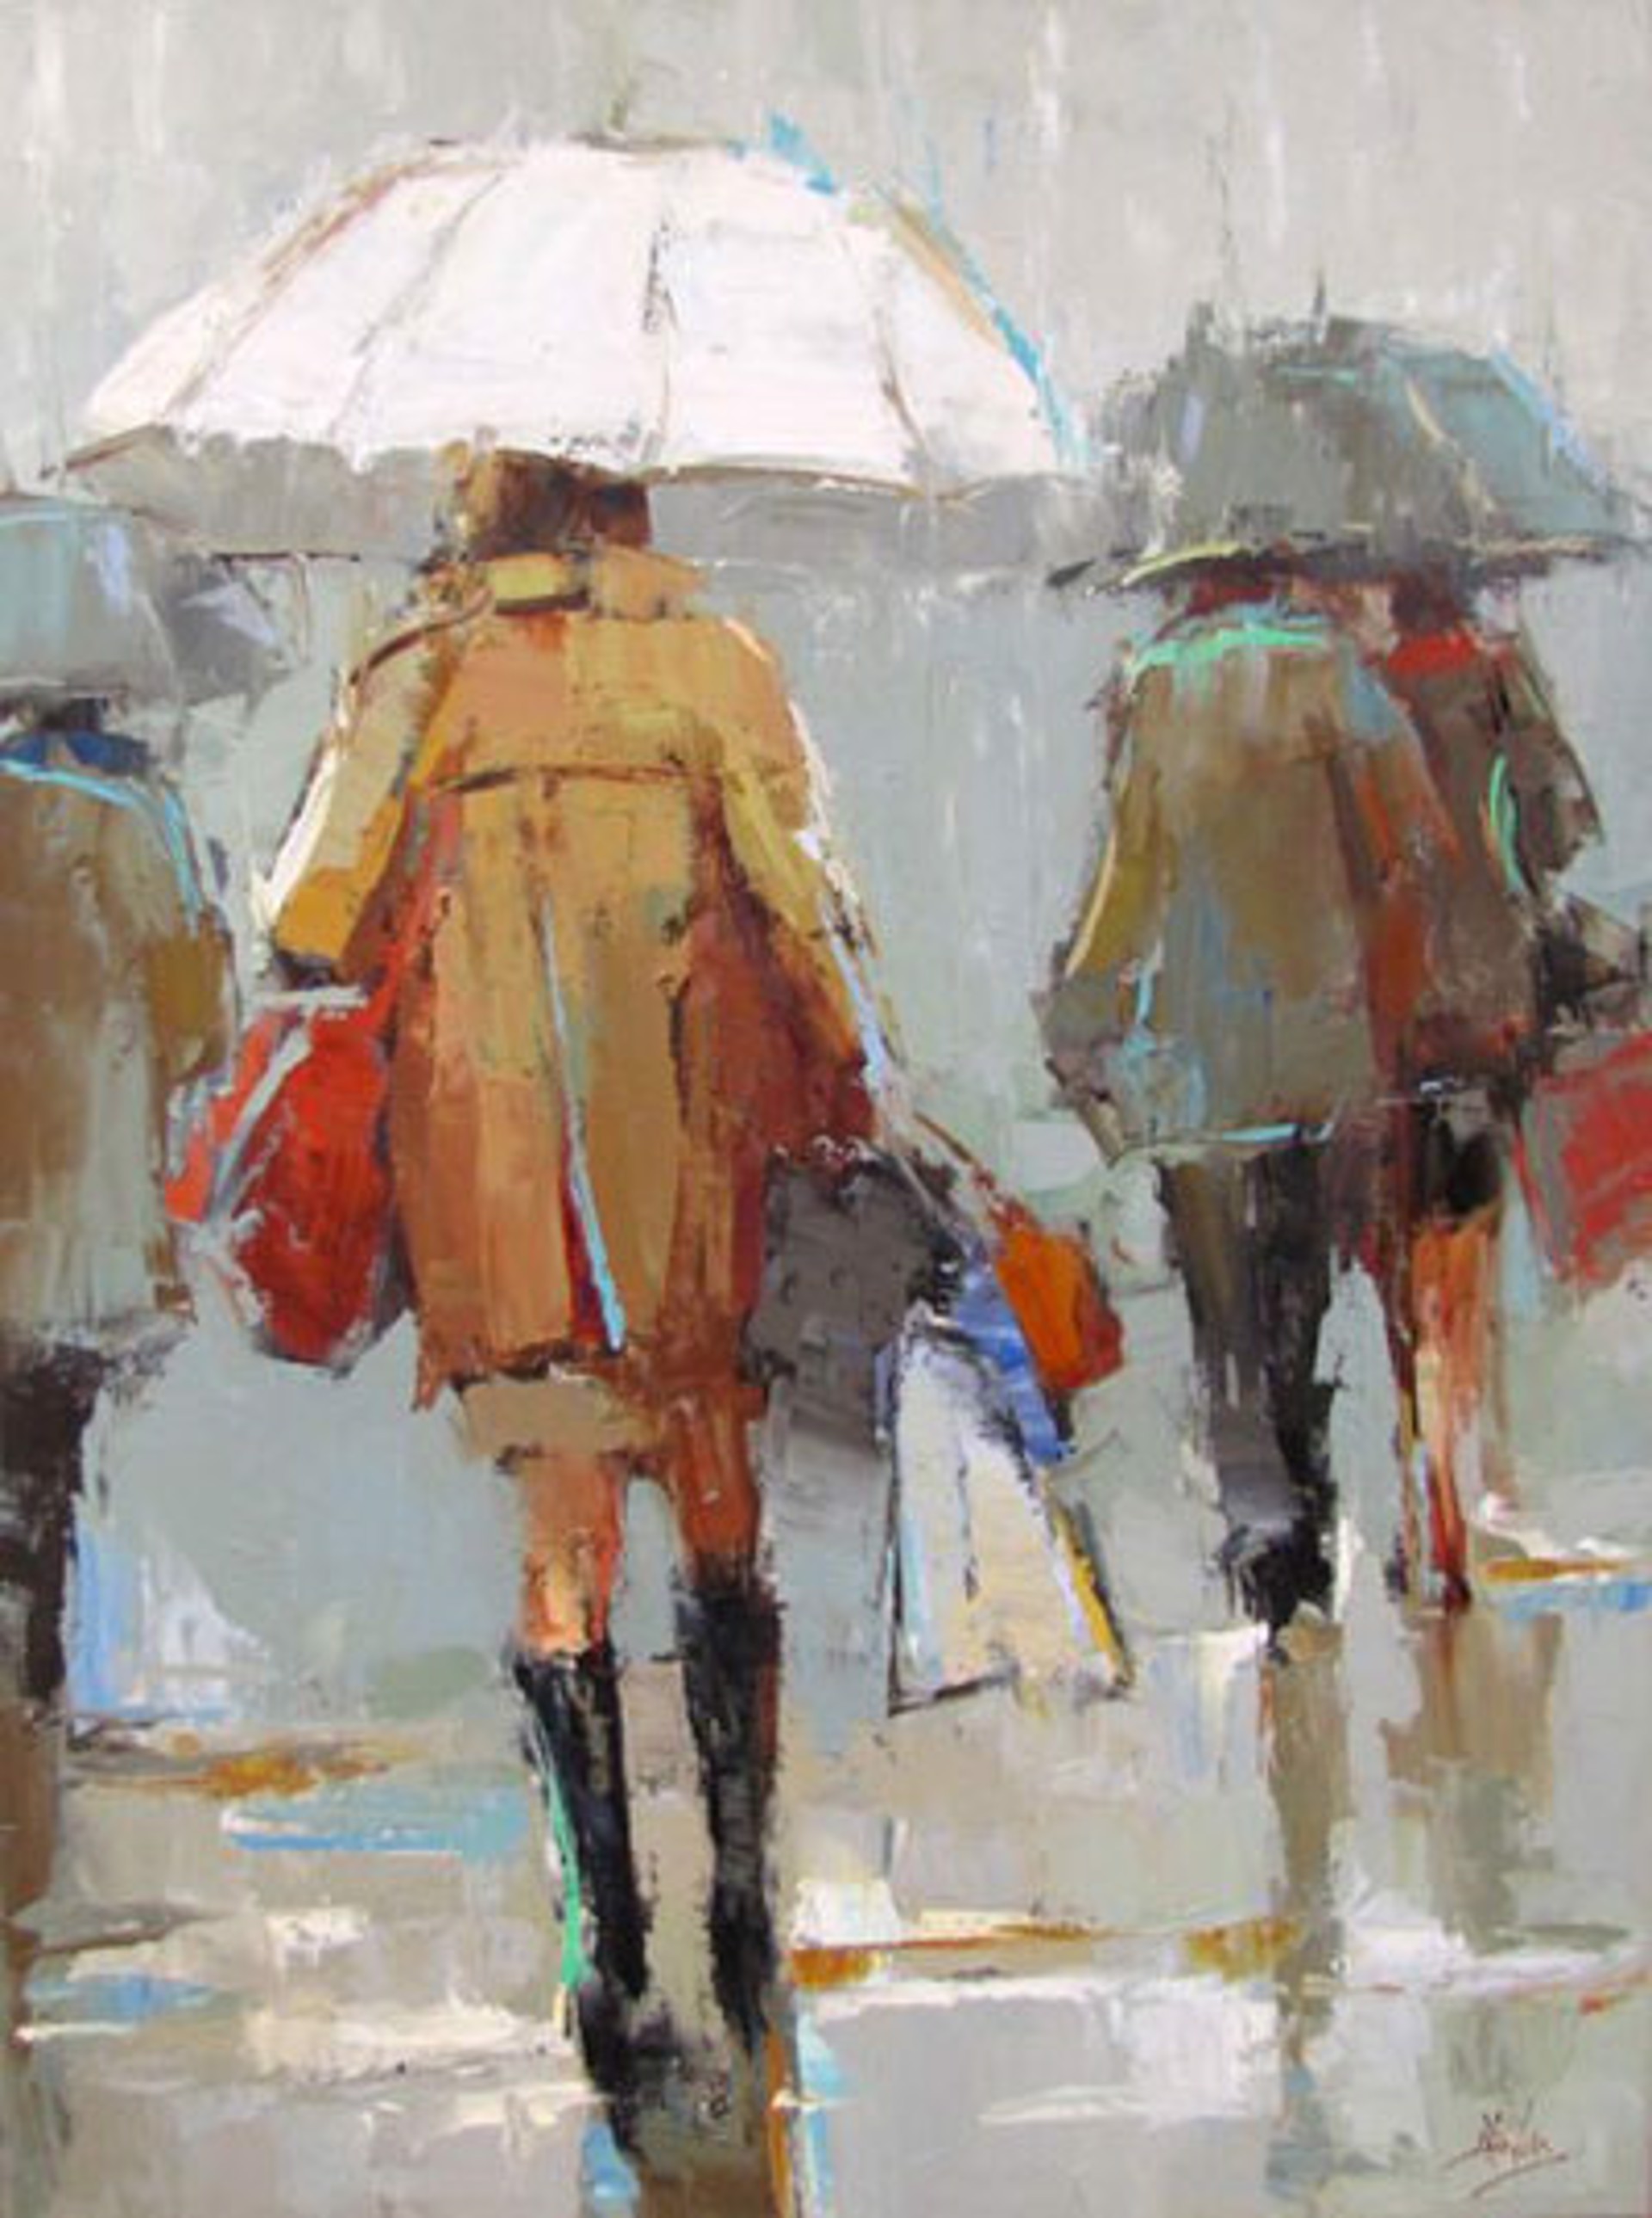 Under the White Umbrella by Barbara Flowers